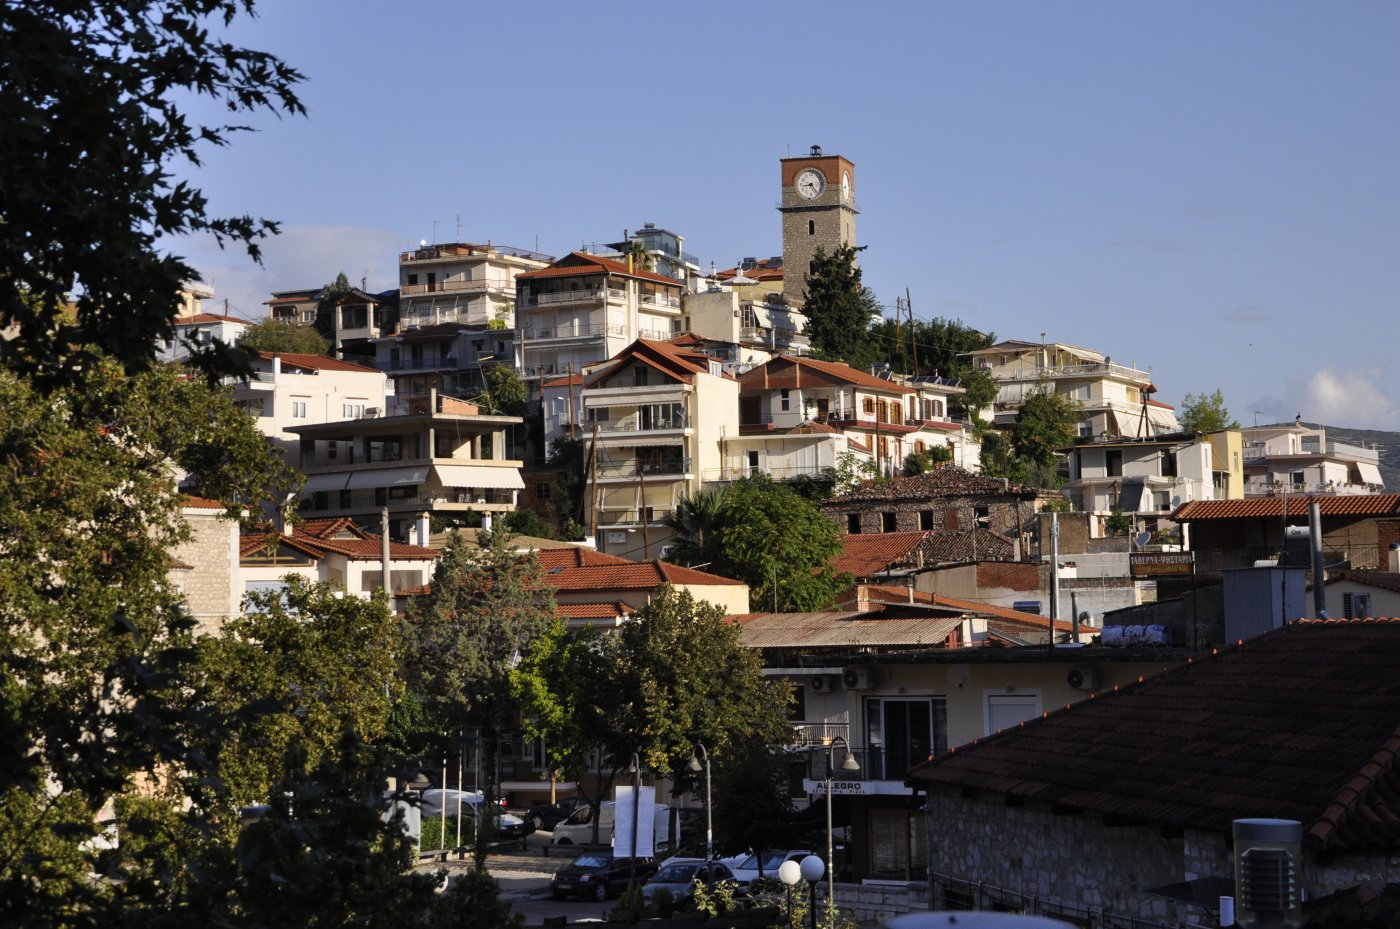 The city of Levadia